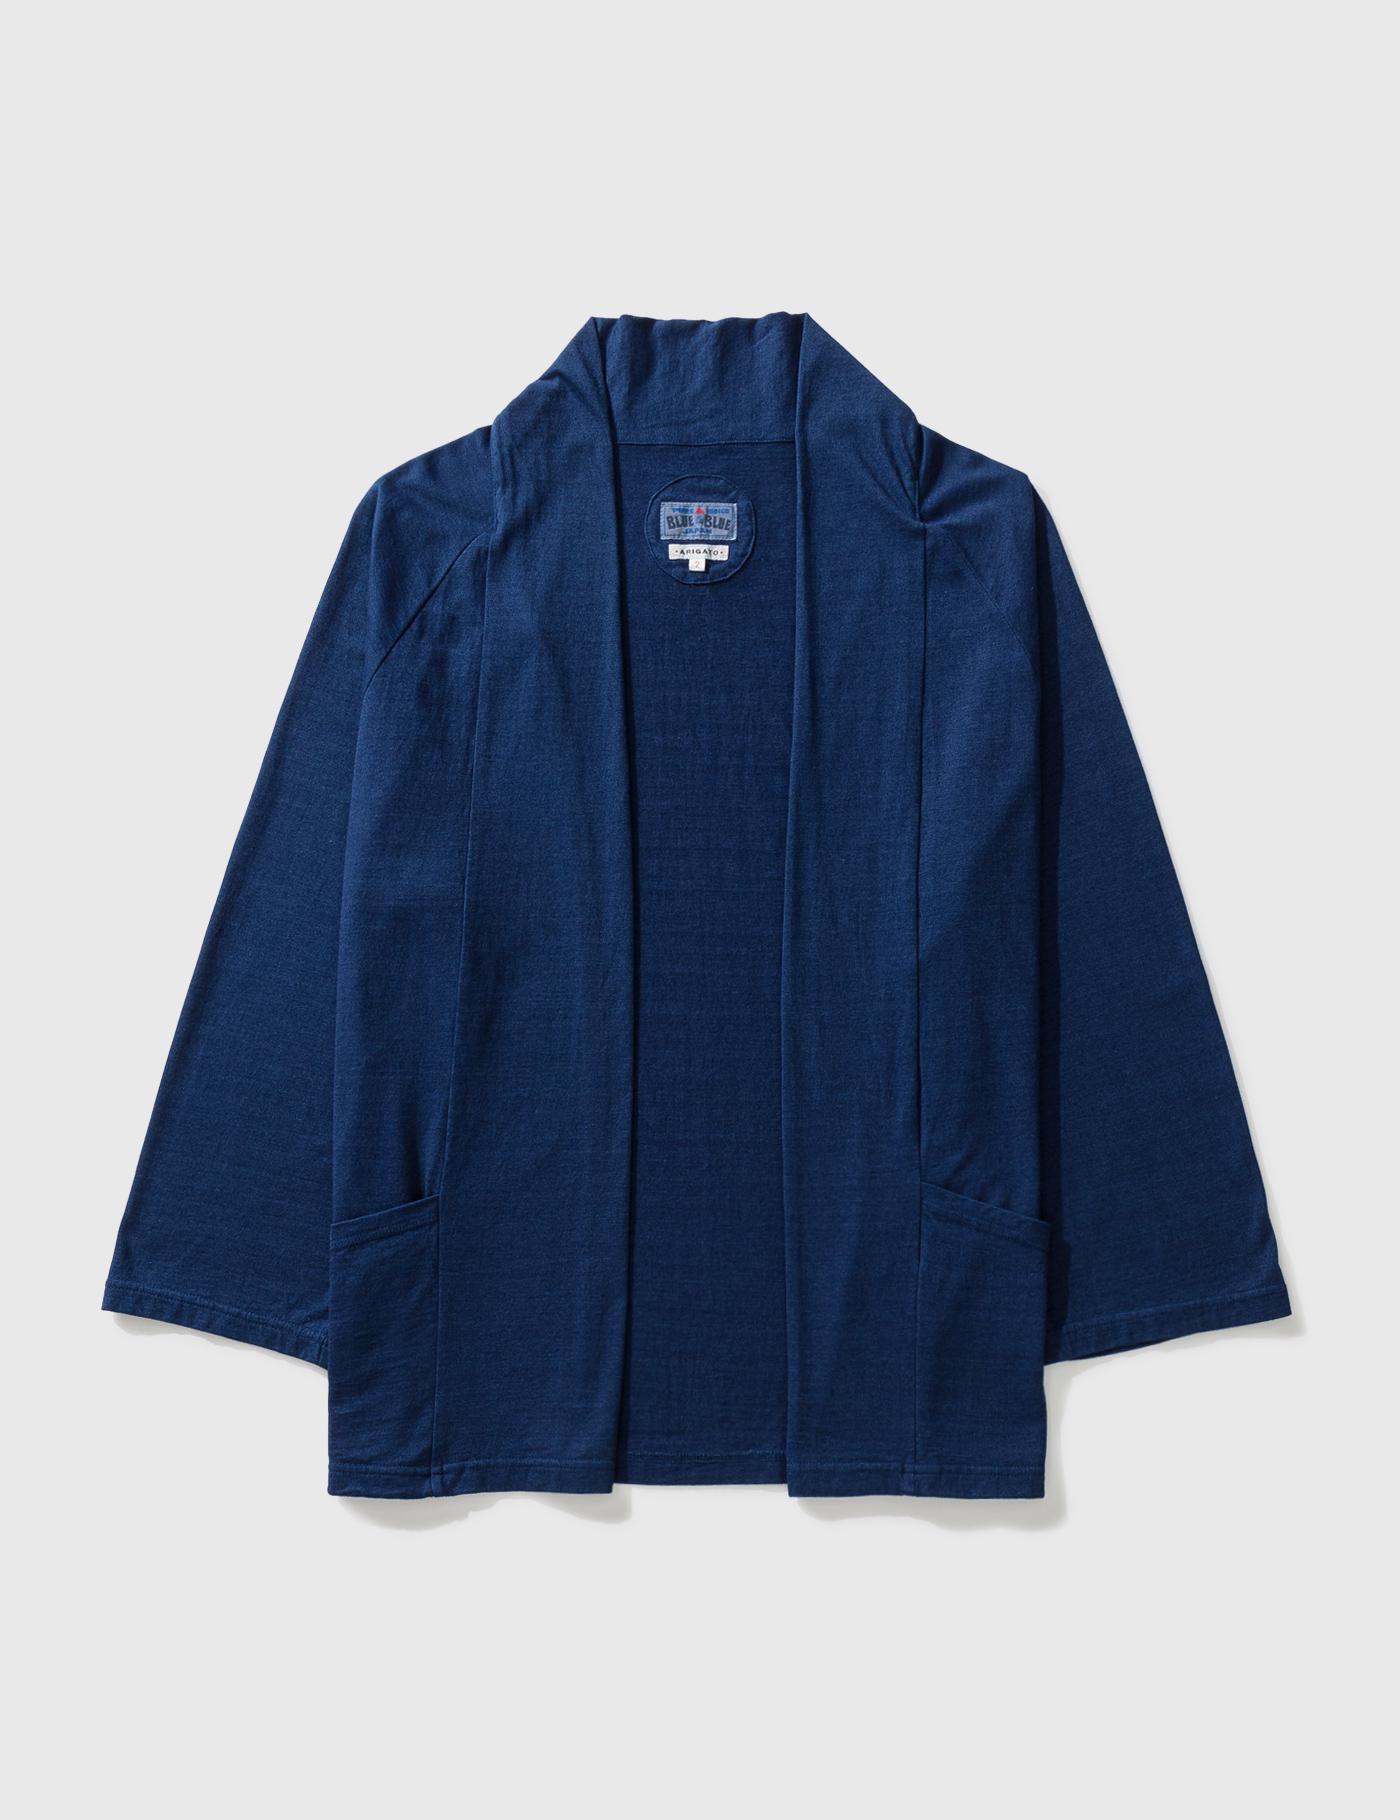 Indigo Soft Jersey Cardigan by BLUE BLUE JAPAN